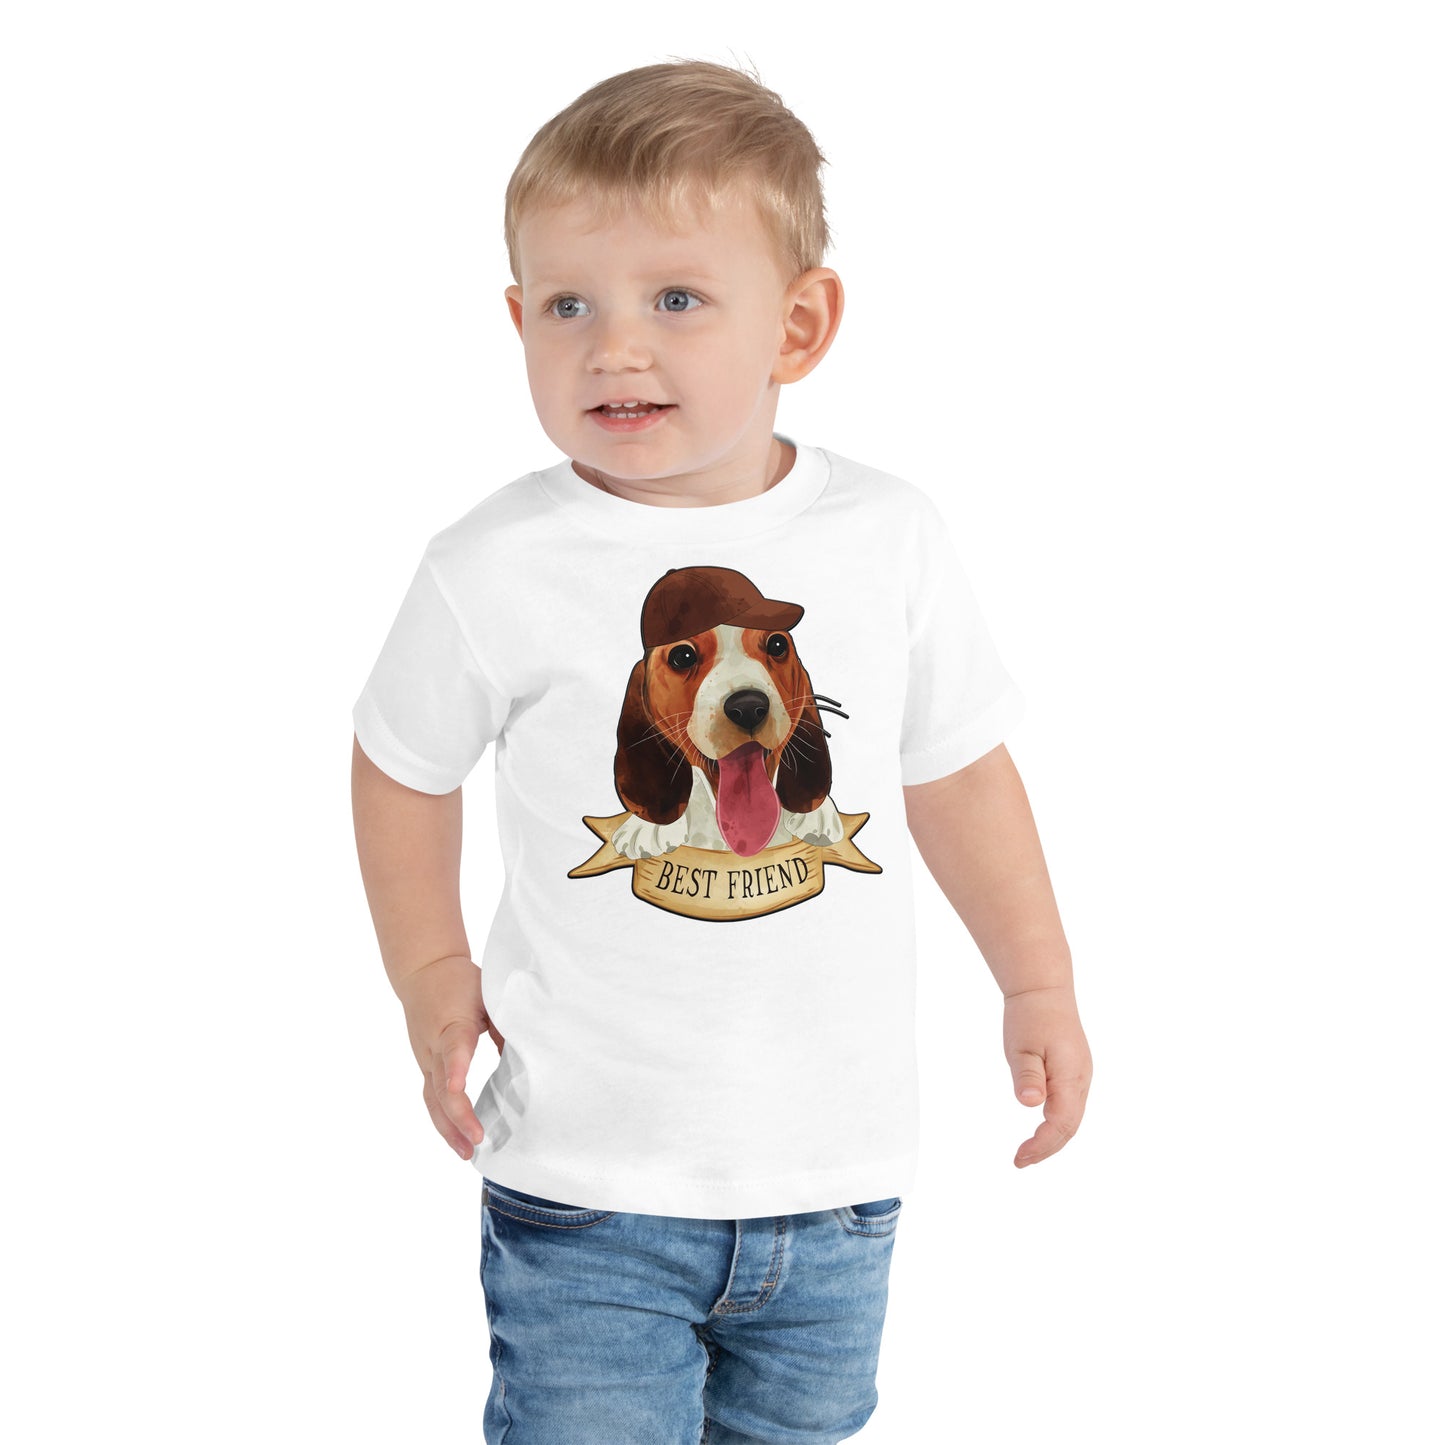 Cute Beagle Dog T-shirt, No. 0279